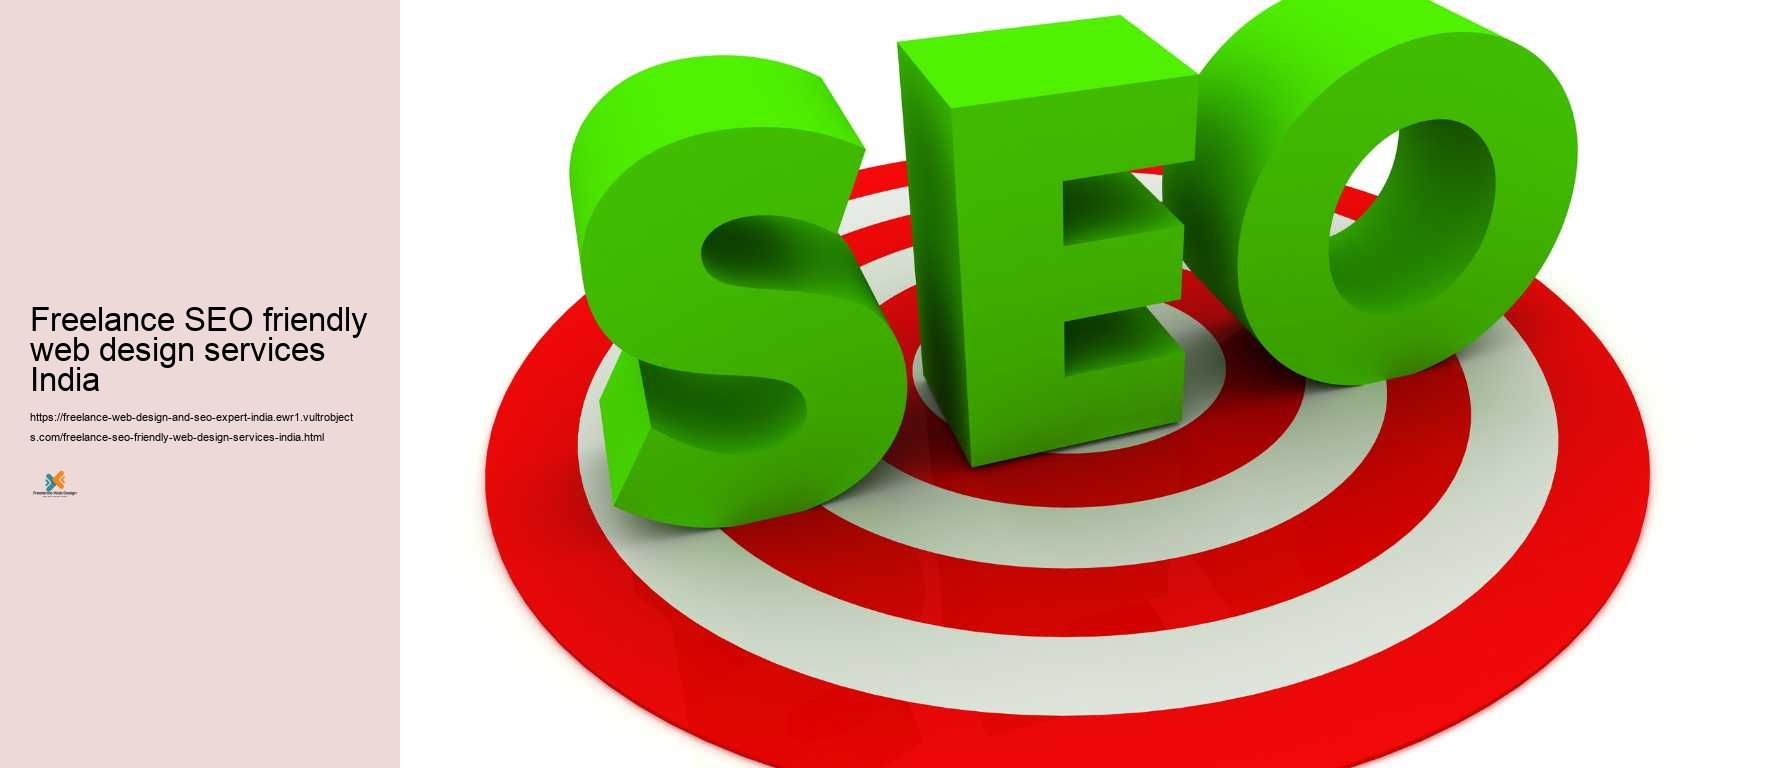 Freelance SEO friendly web design services India